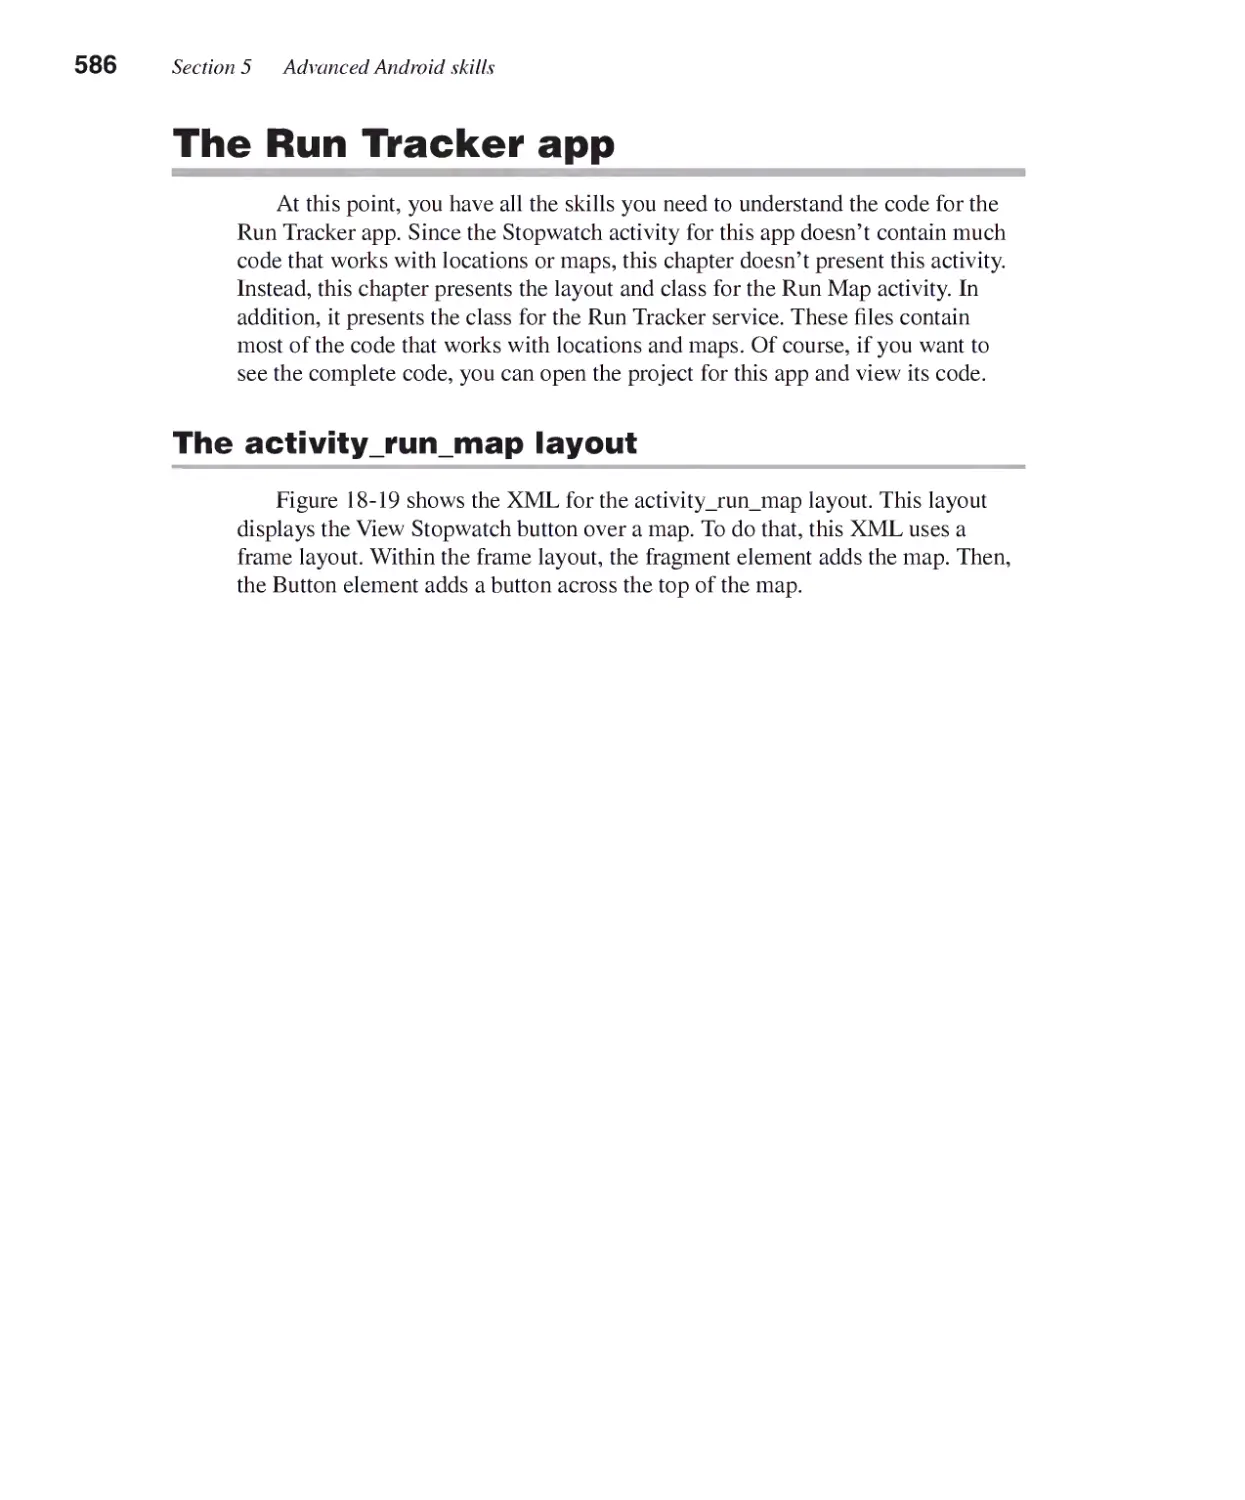 The Run Tracker App